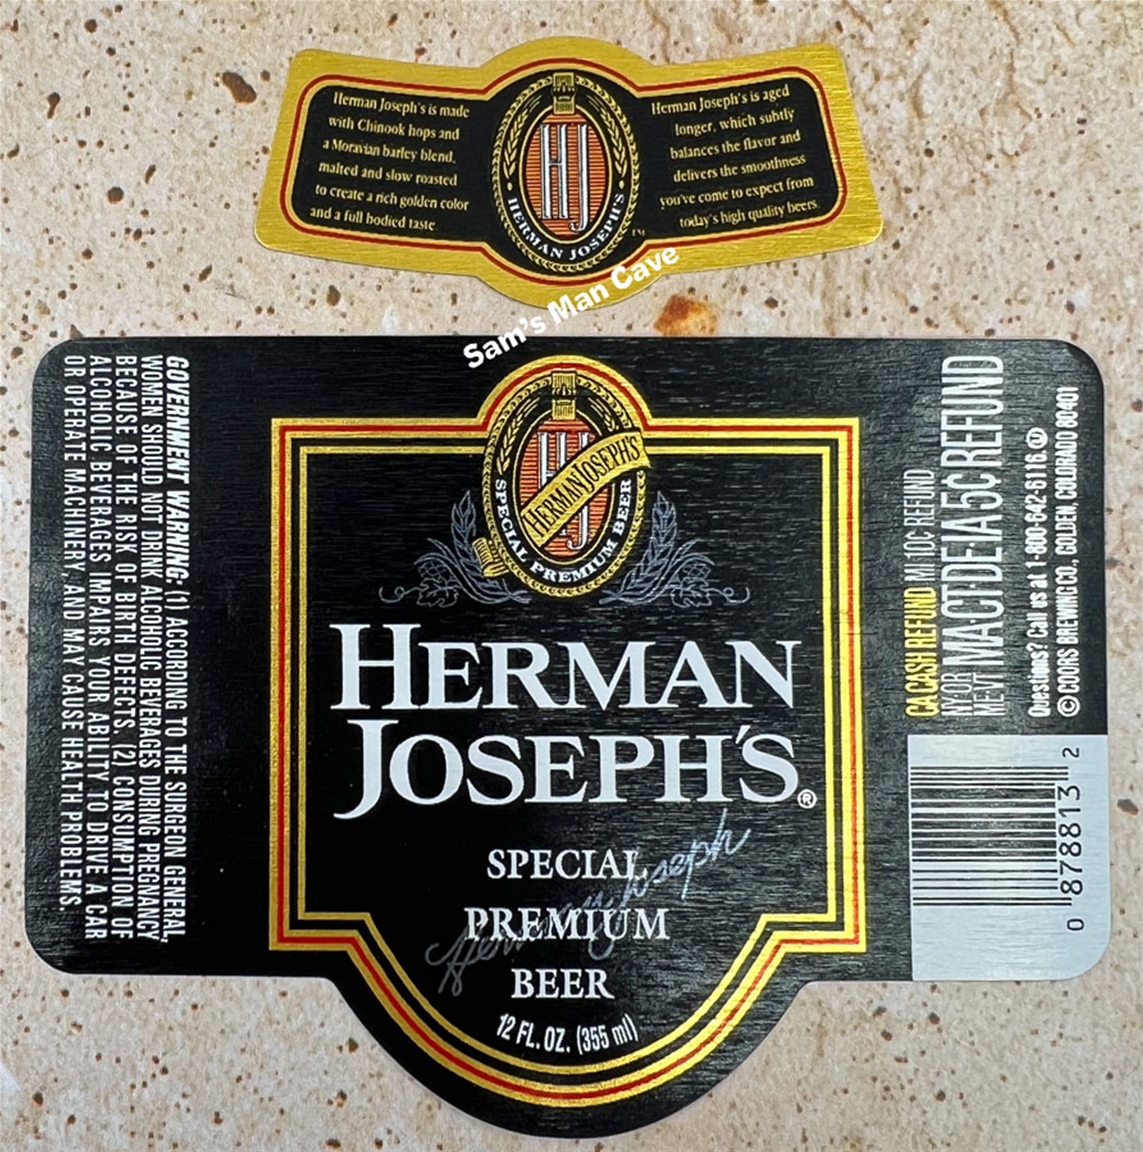 Herman Joseph's Beer Label with neck